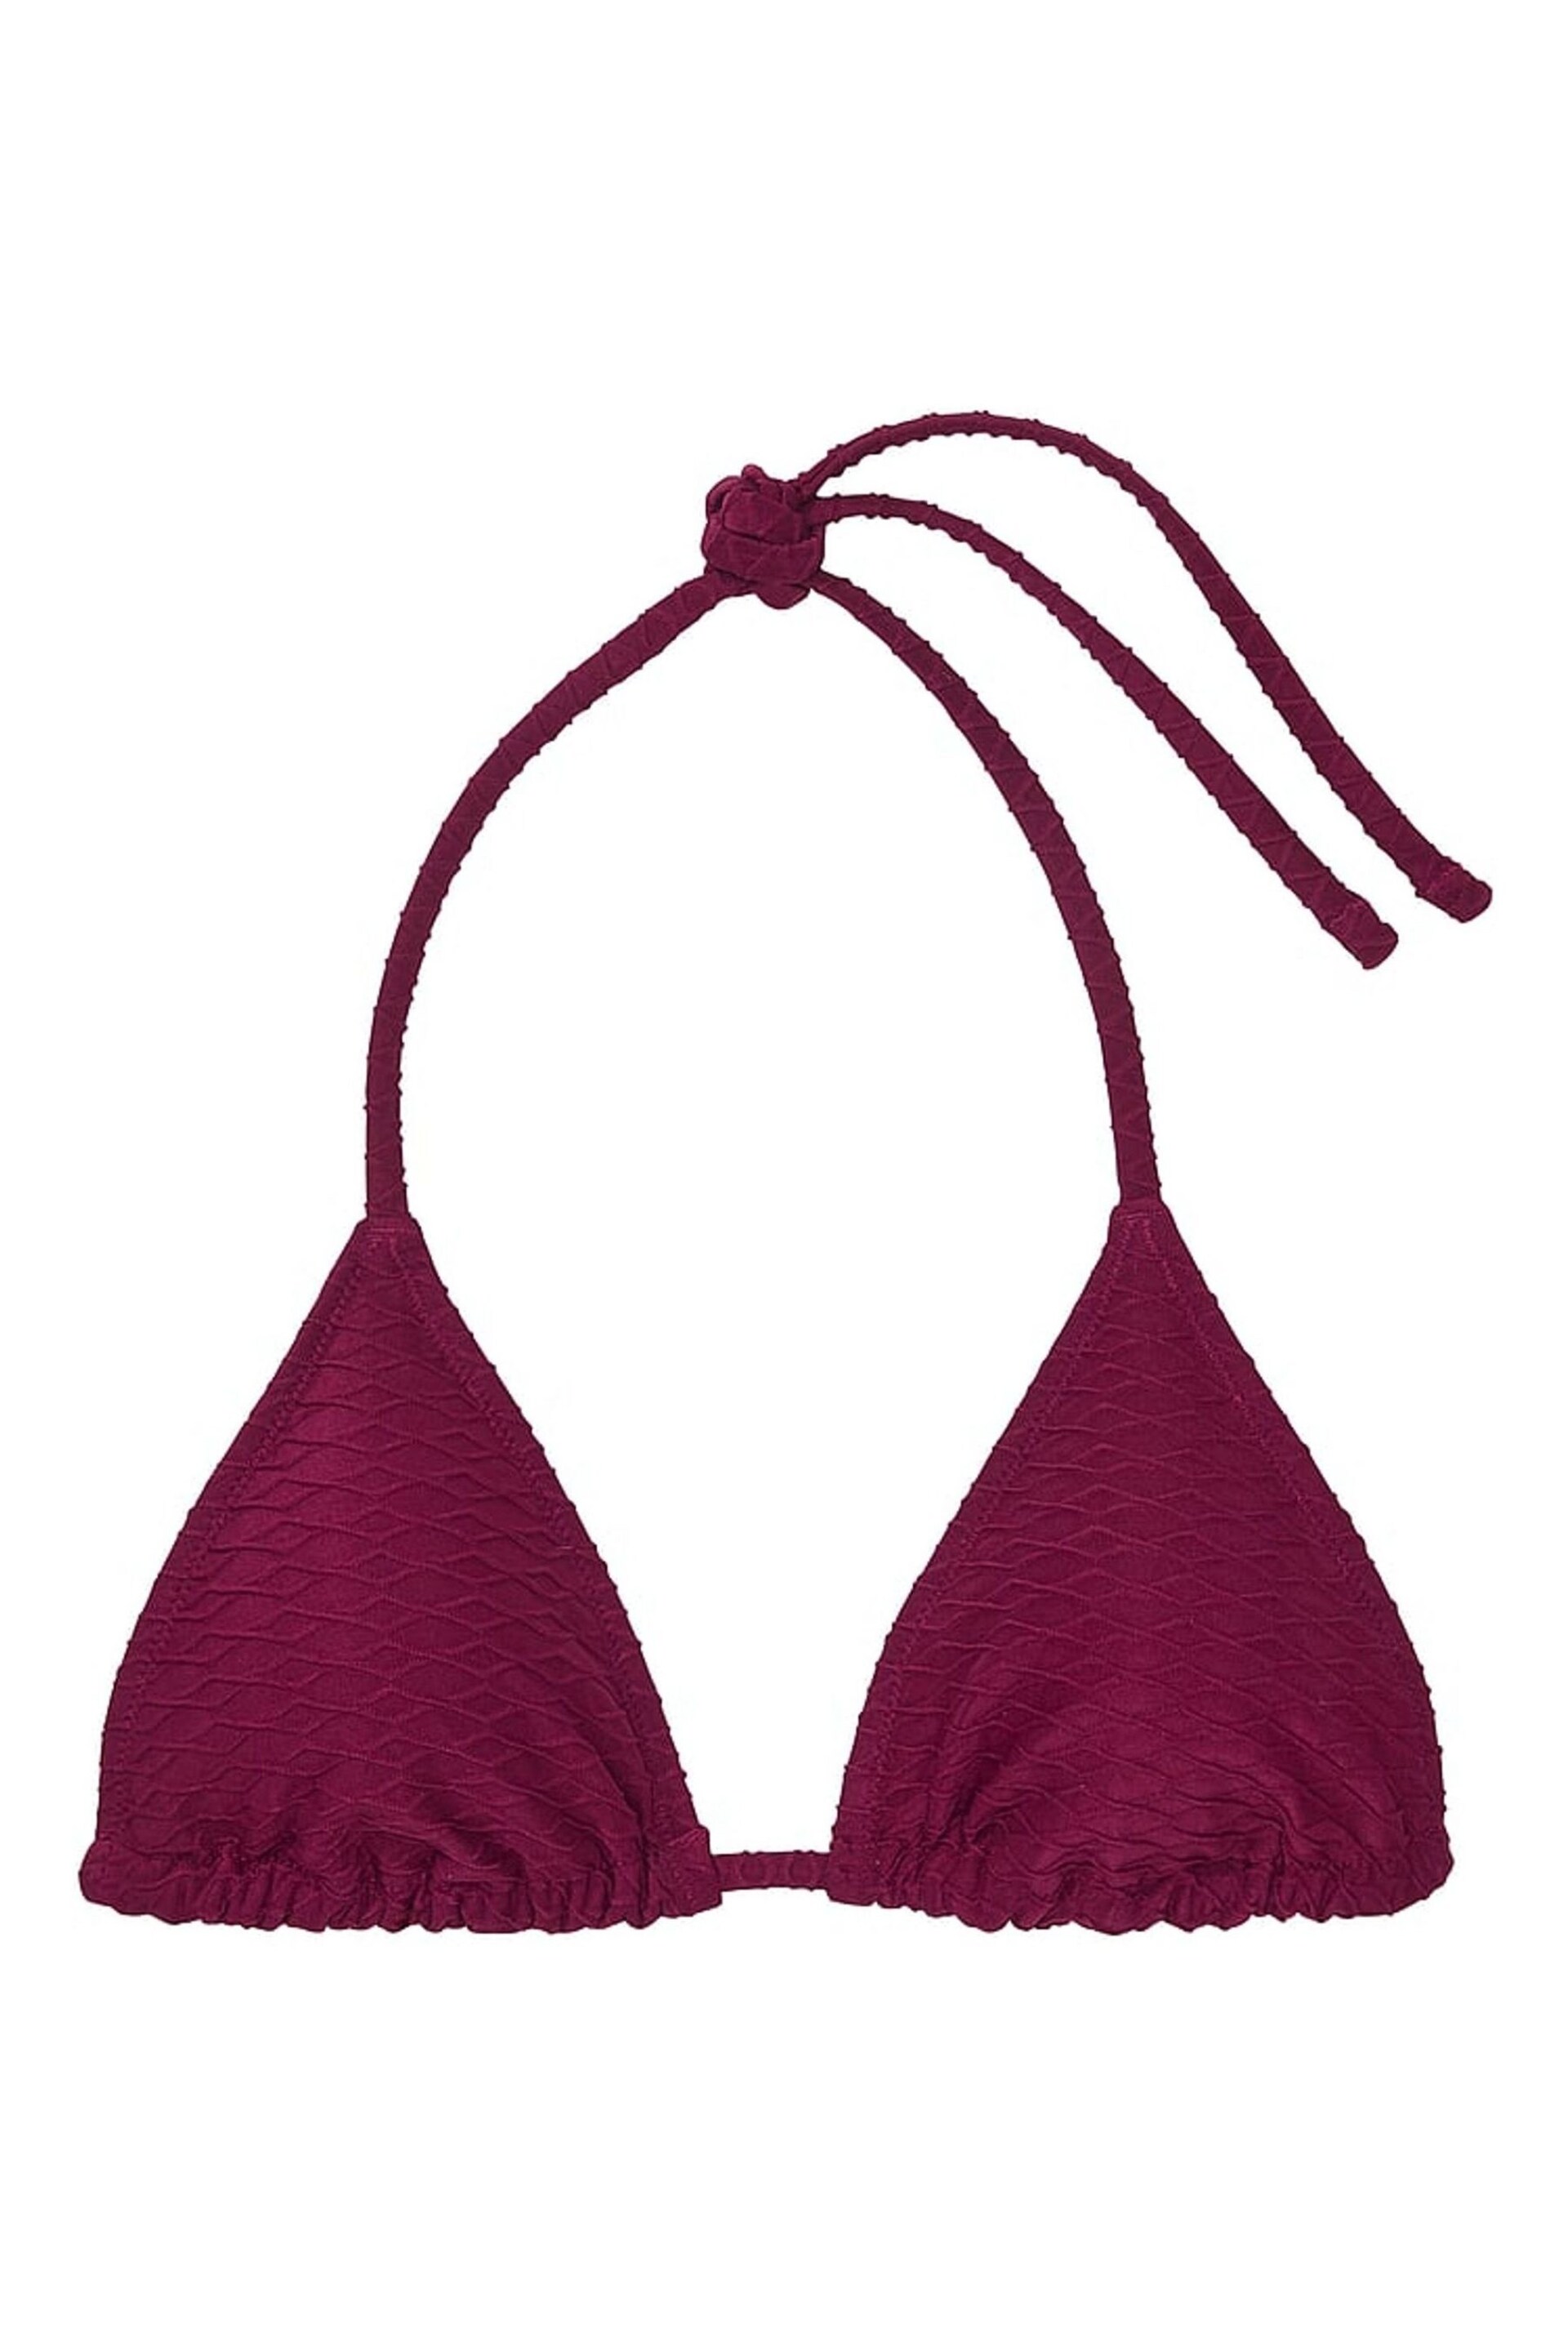 Victoria's Secret Pink Rouge Fishnet Triangle Swim Bikini Top - Image 3 of 3